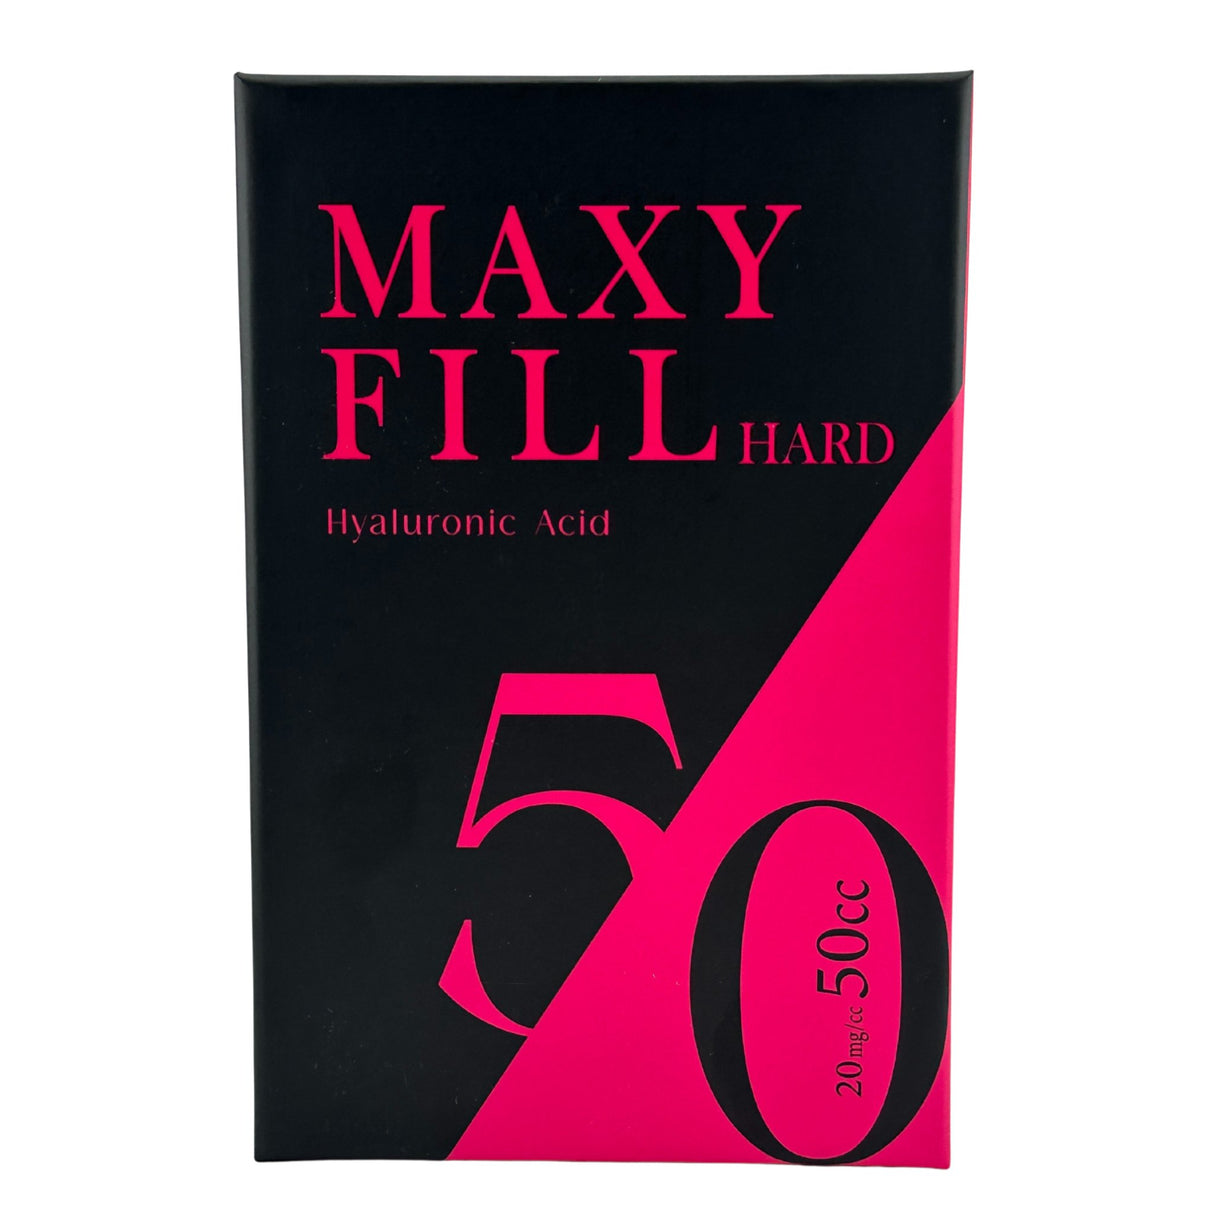 Maxy Fill Body Syringe - Filler Lux™ - DERMAL FILLERS - Quiver Medic